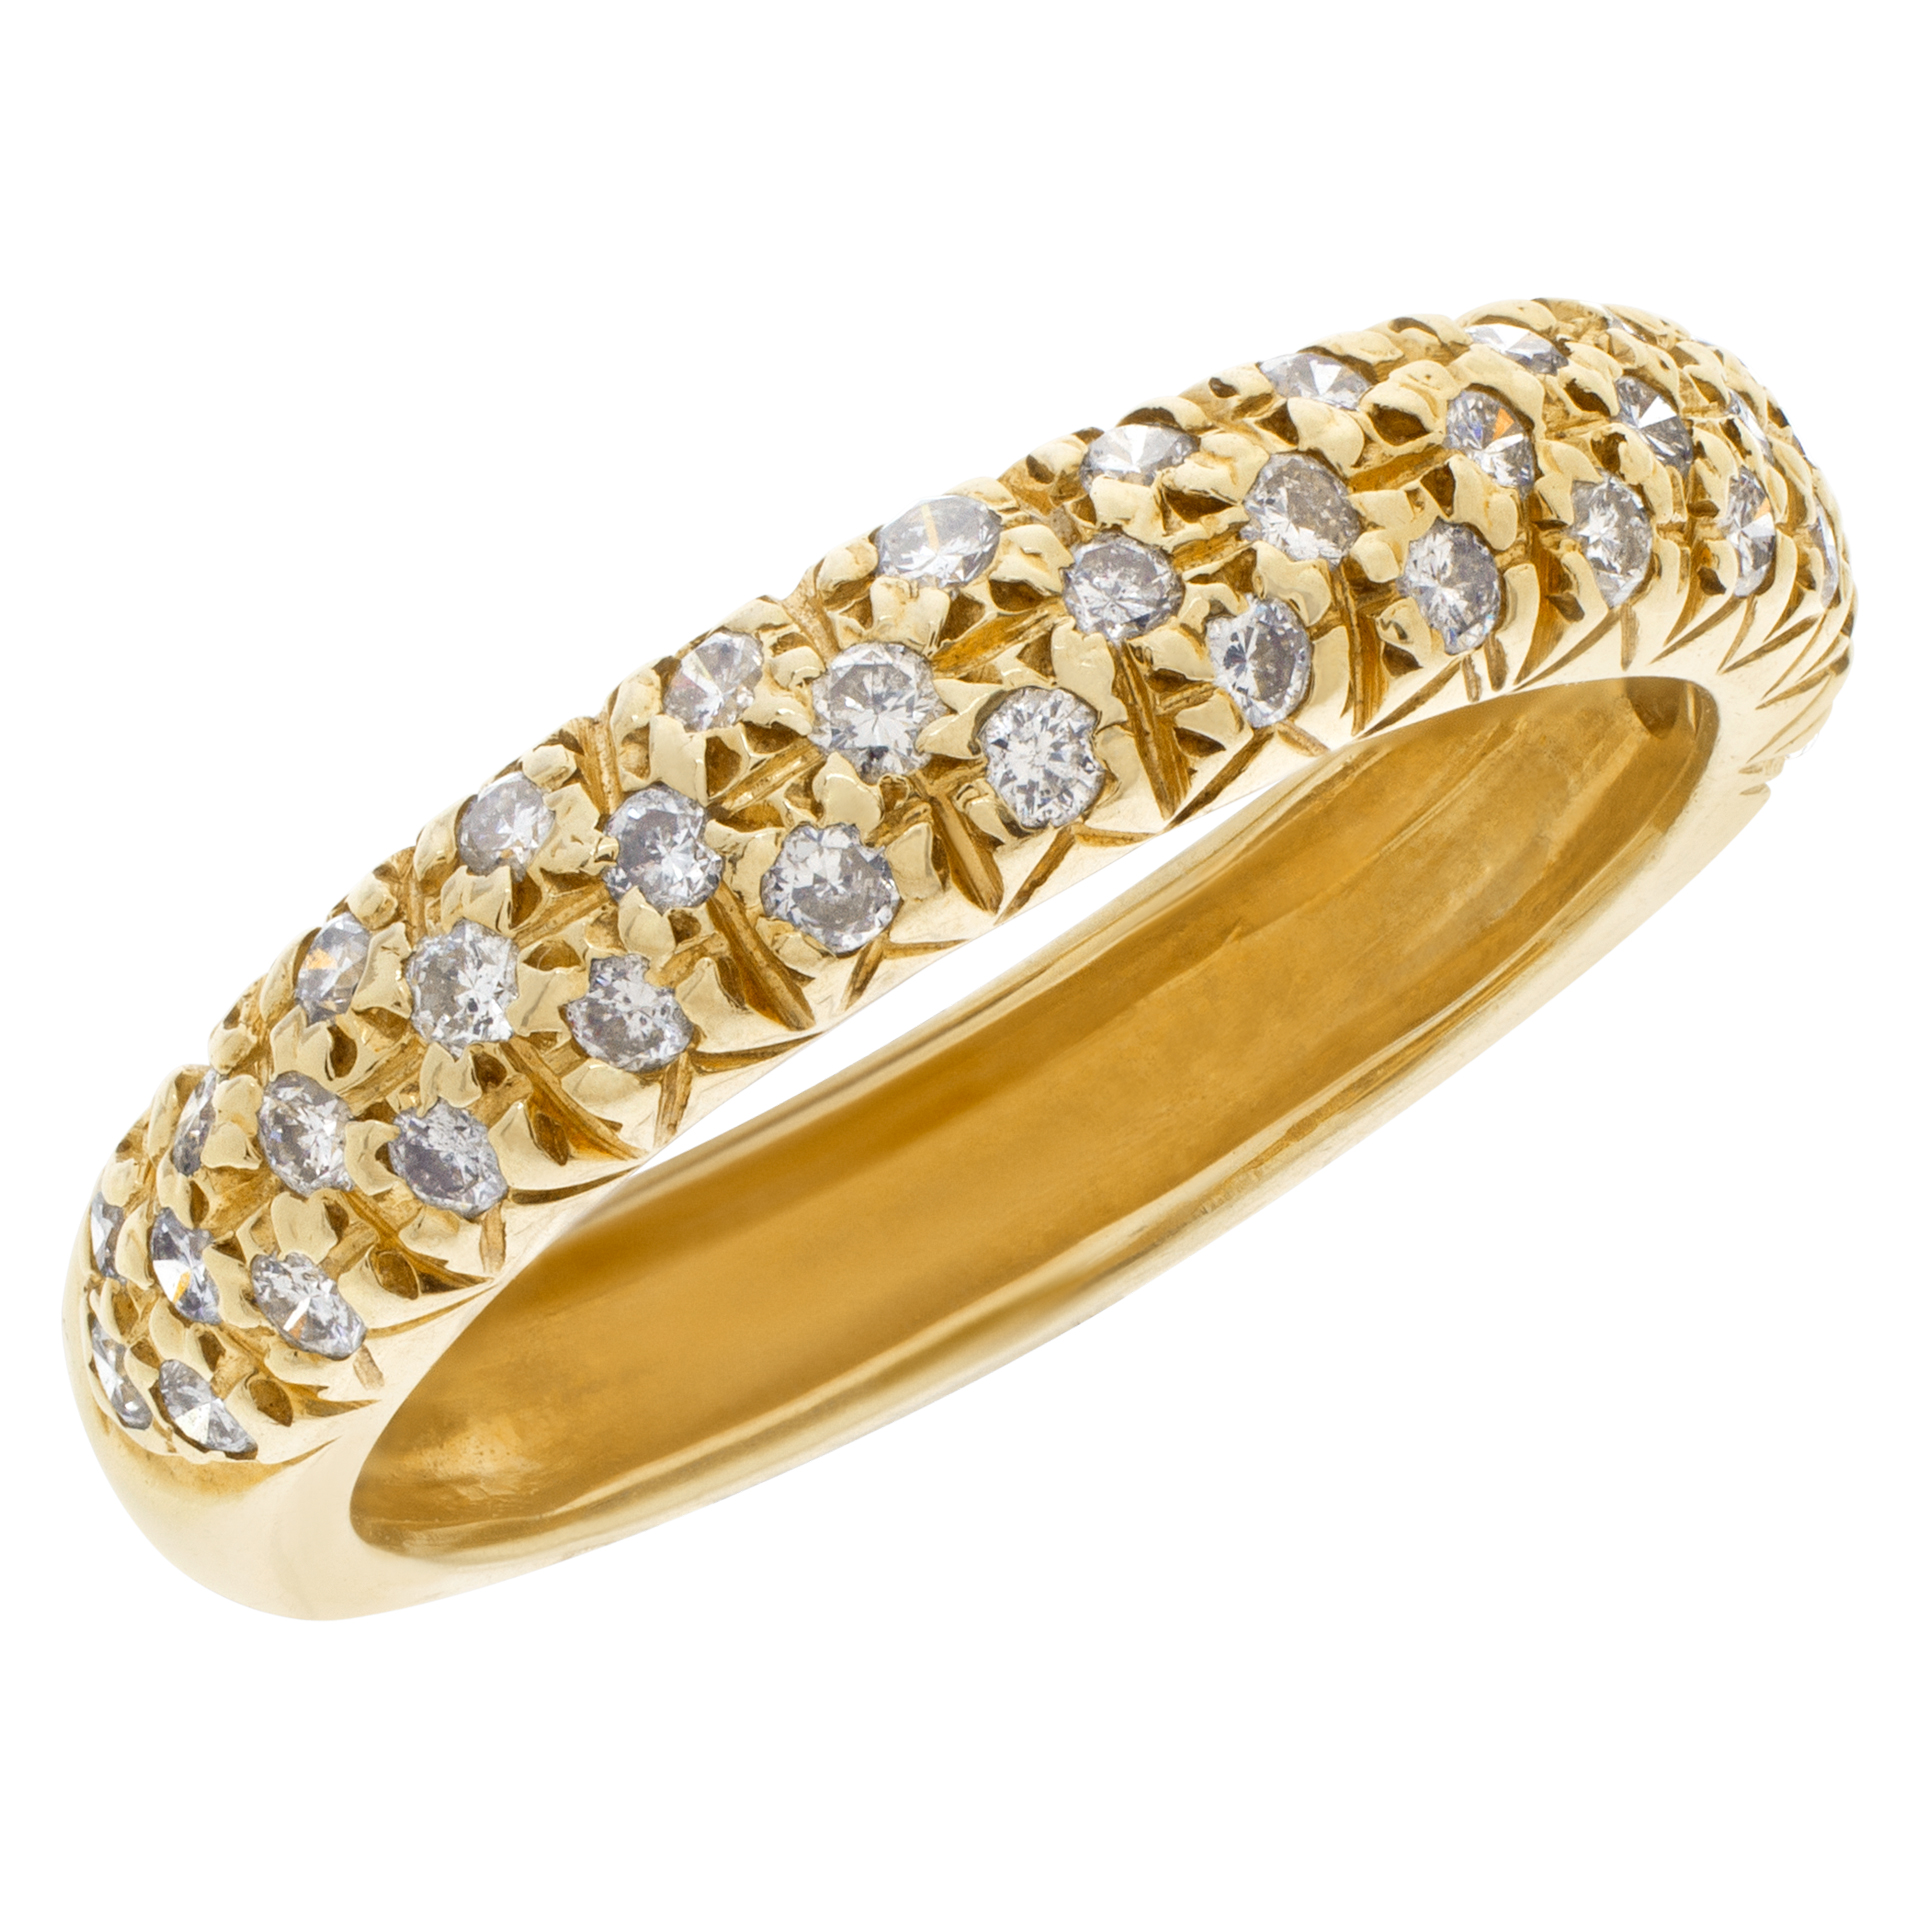 Precious pavé diamond band in 14k yellow gold. 0.80 carats in diamonds. Size 6 image 3